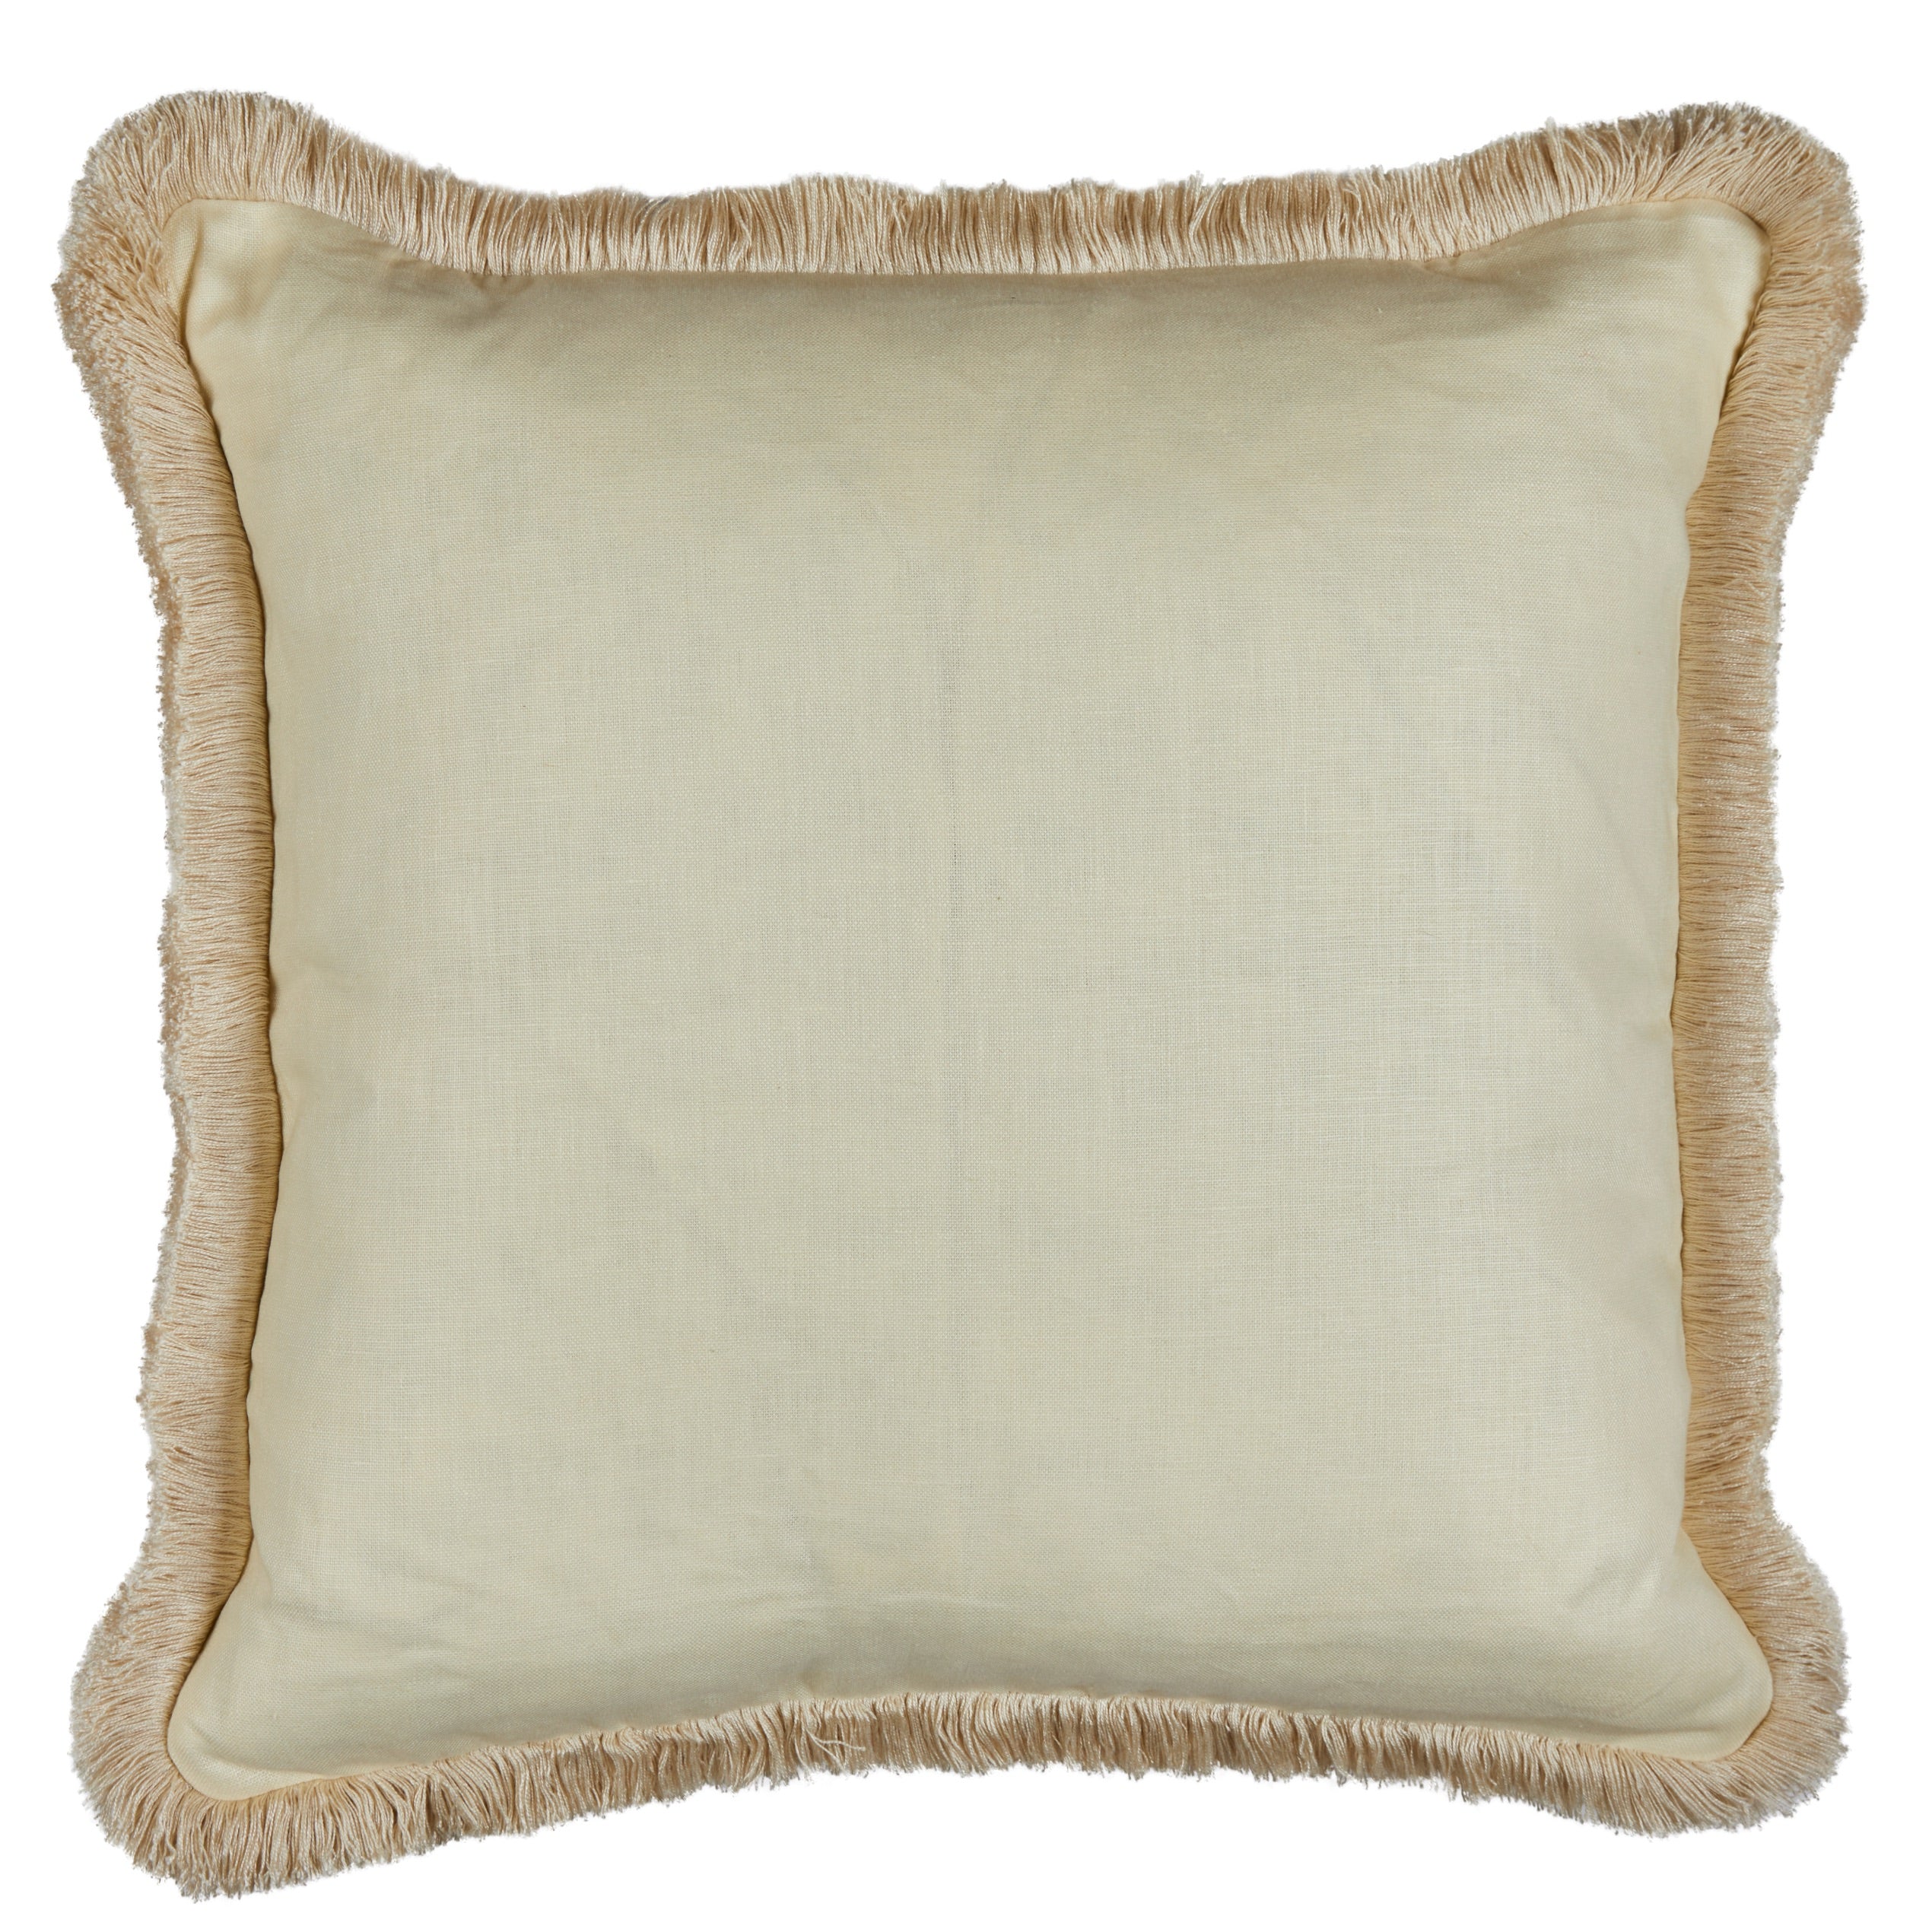 Enid's Garland Paler Back Cushion with a Brush Fringe